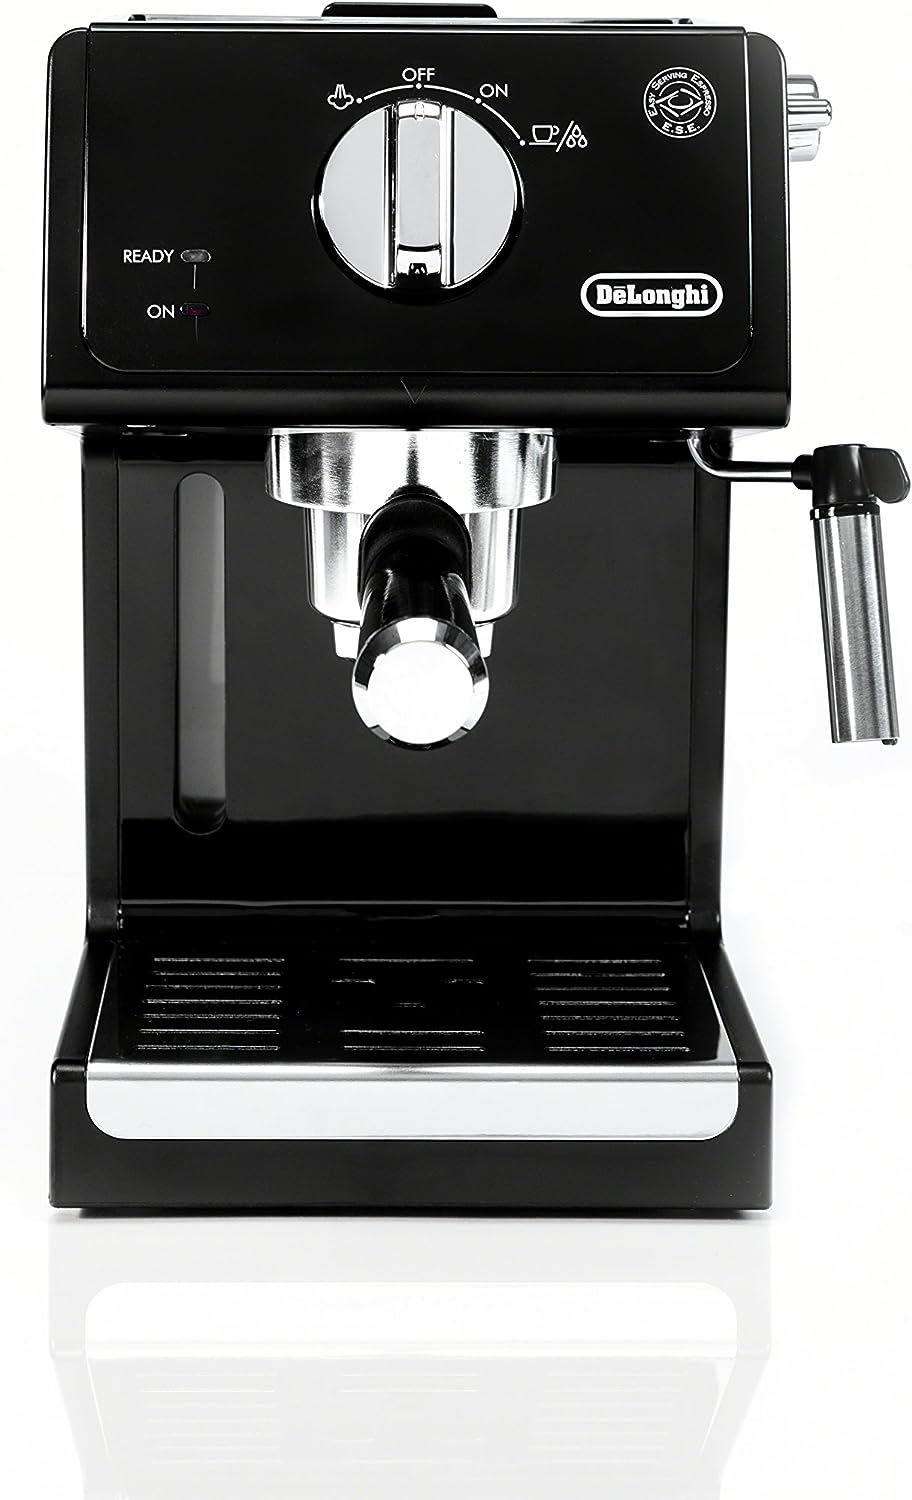 15bar Electric Espresso Coffee Machine Maker With Grinder